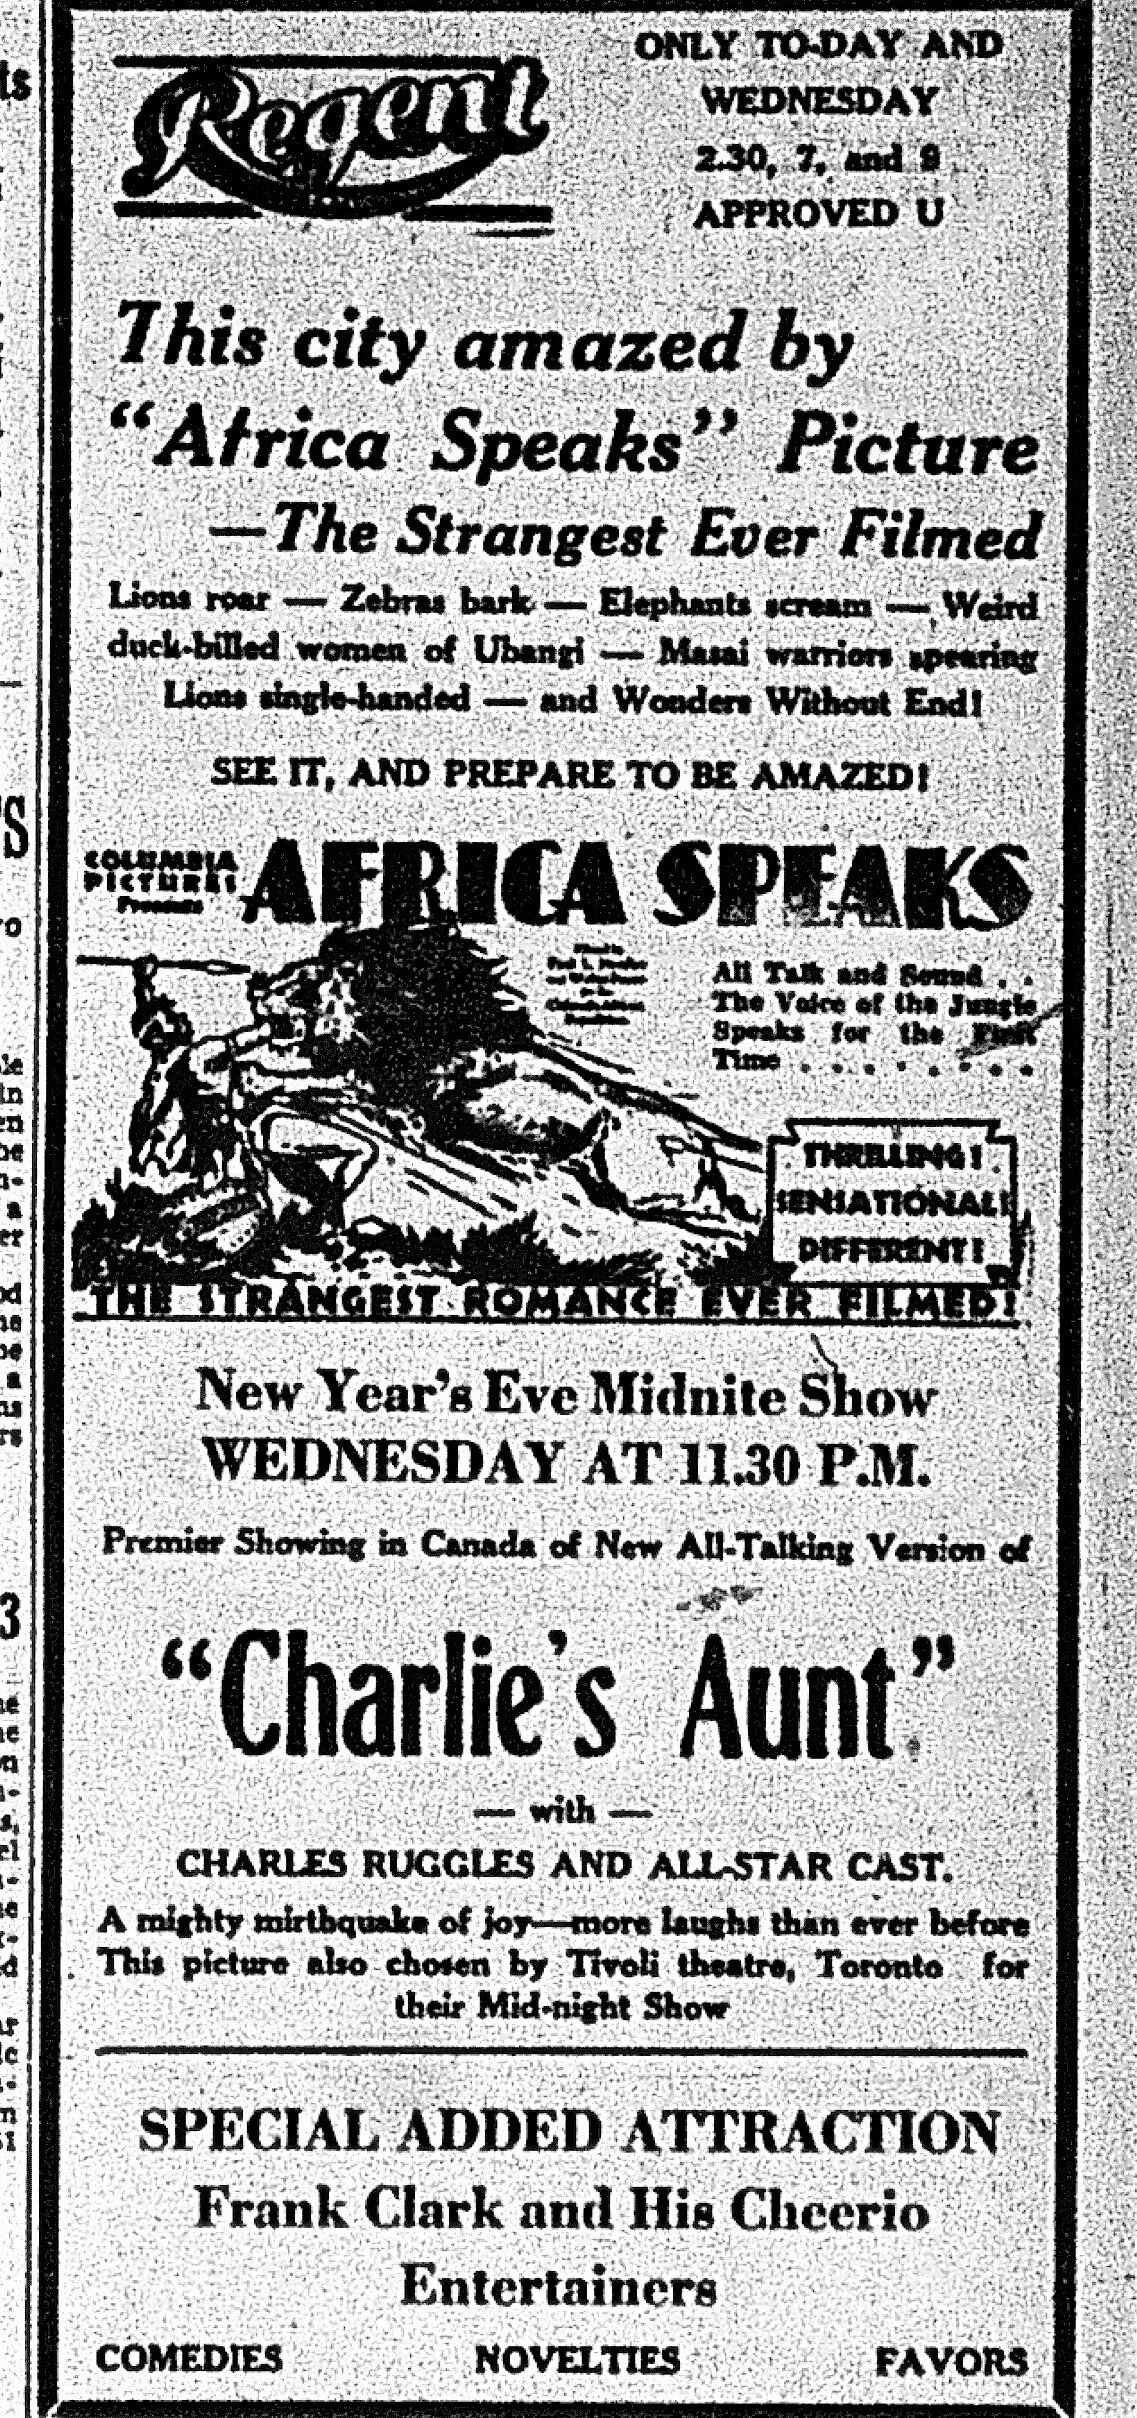 1930 Dec 30 p13 Regent w live act (2).JPG